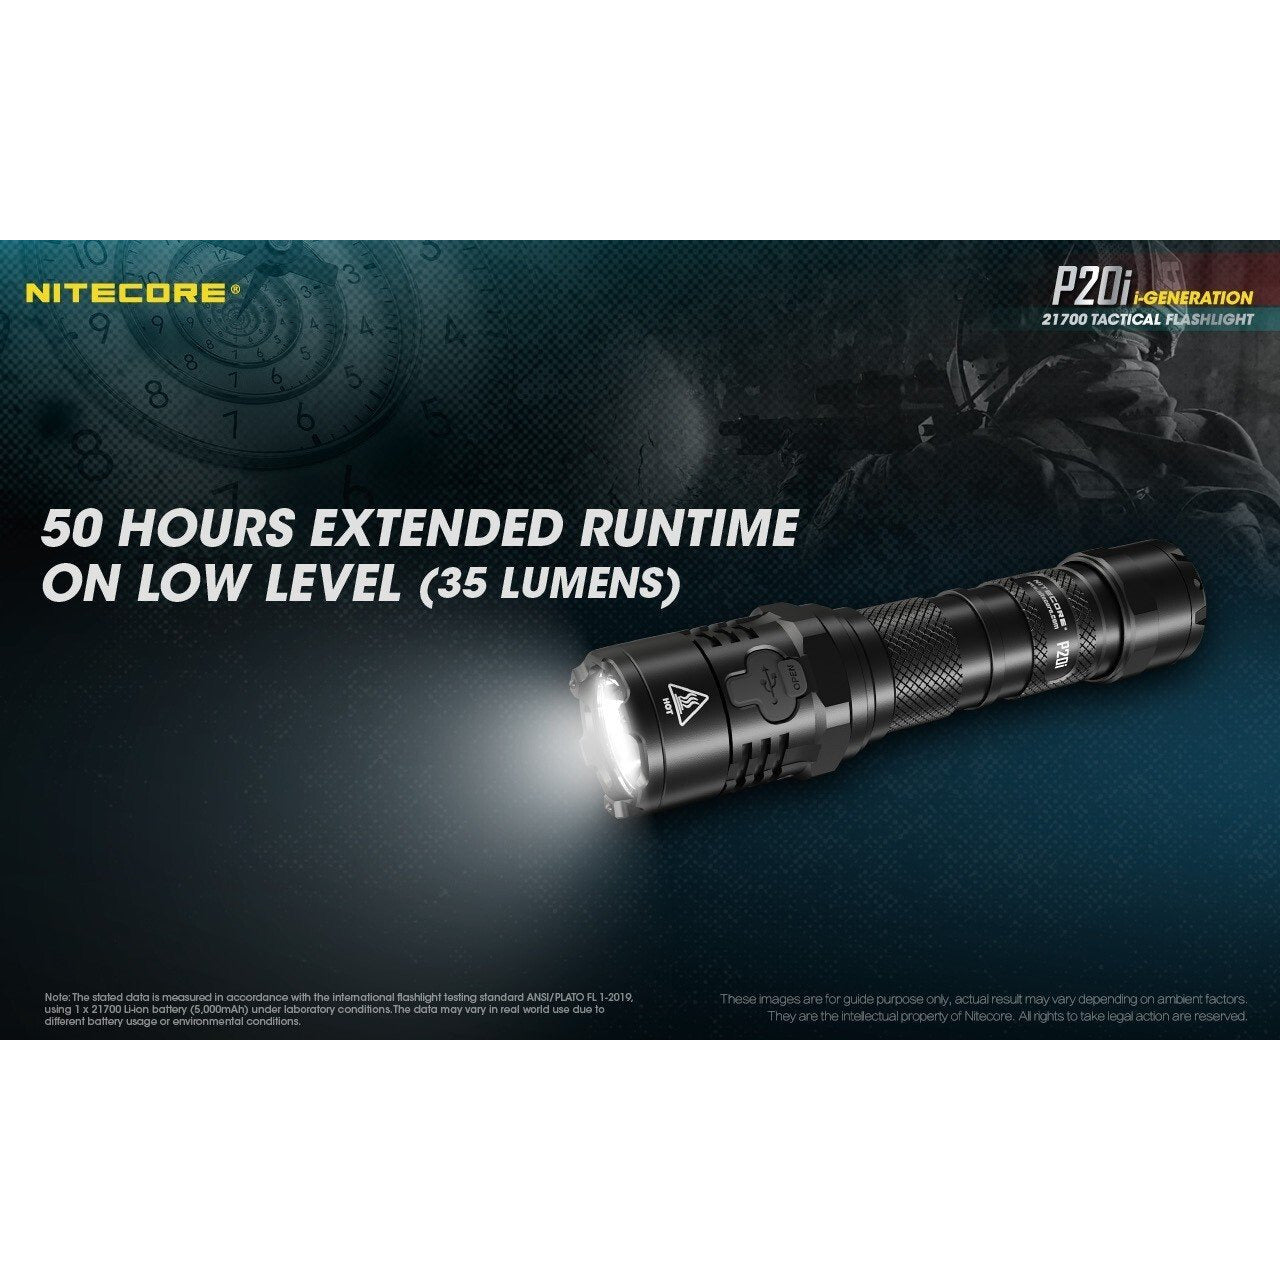 Nitecore Nitecore Compact Rechargeable Tactical Flashlight Torch - 1800 Lumen Strobe Ready W Battery #p20I Black